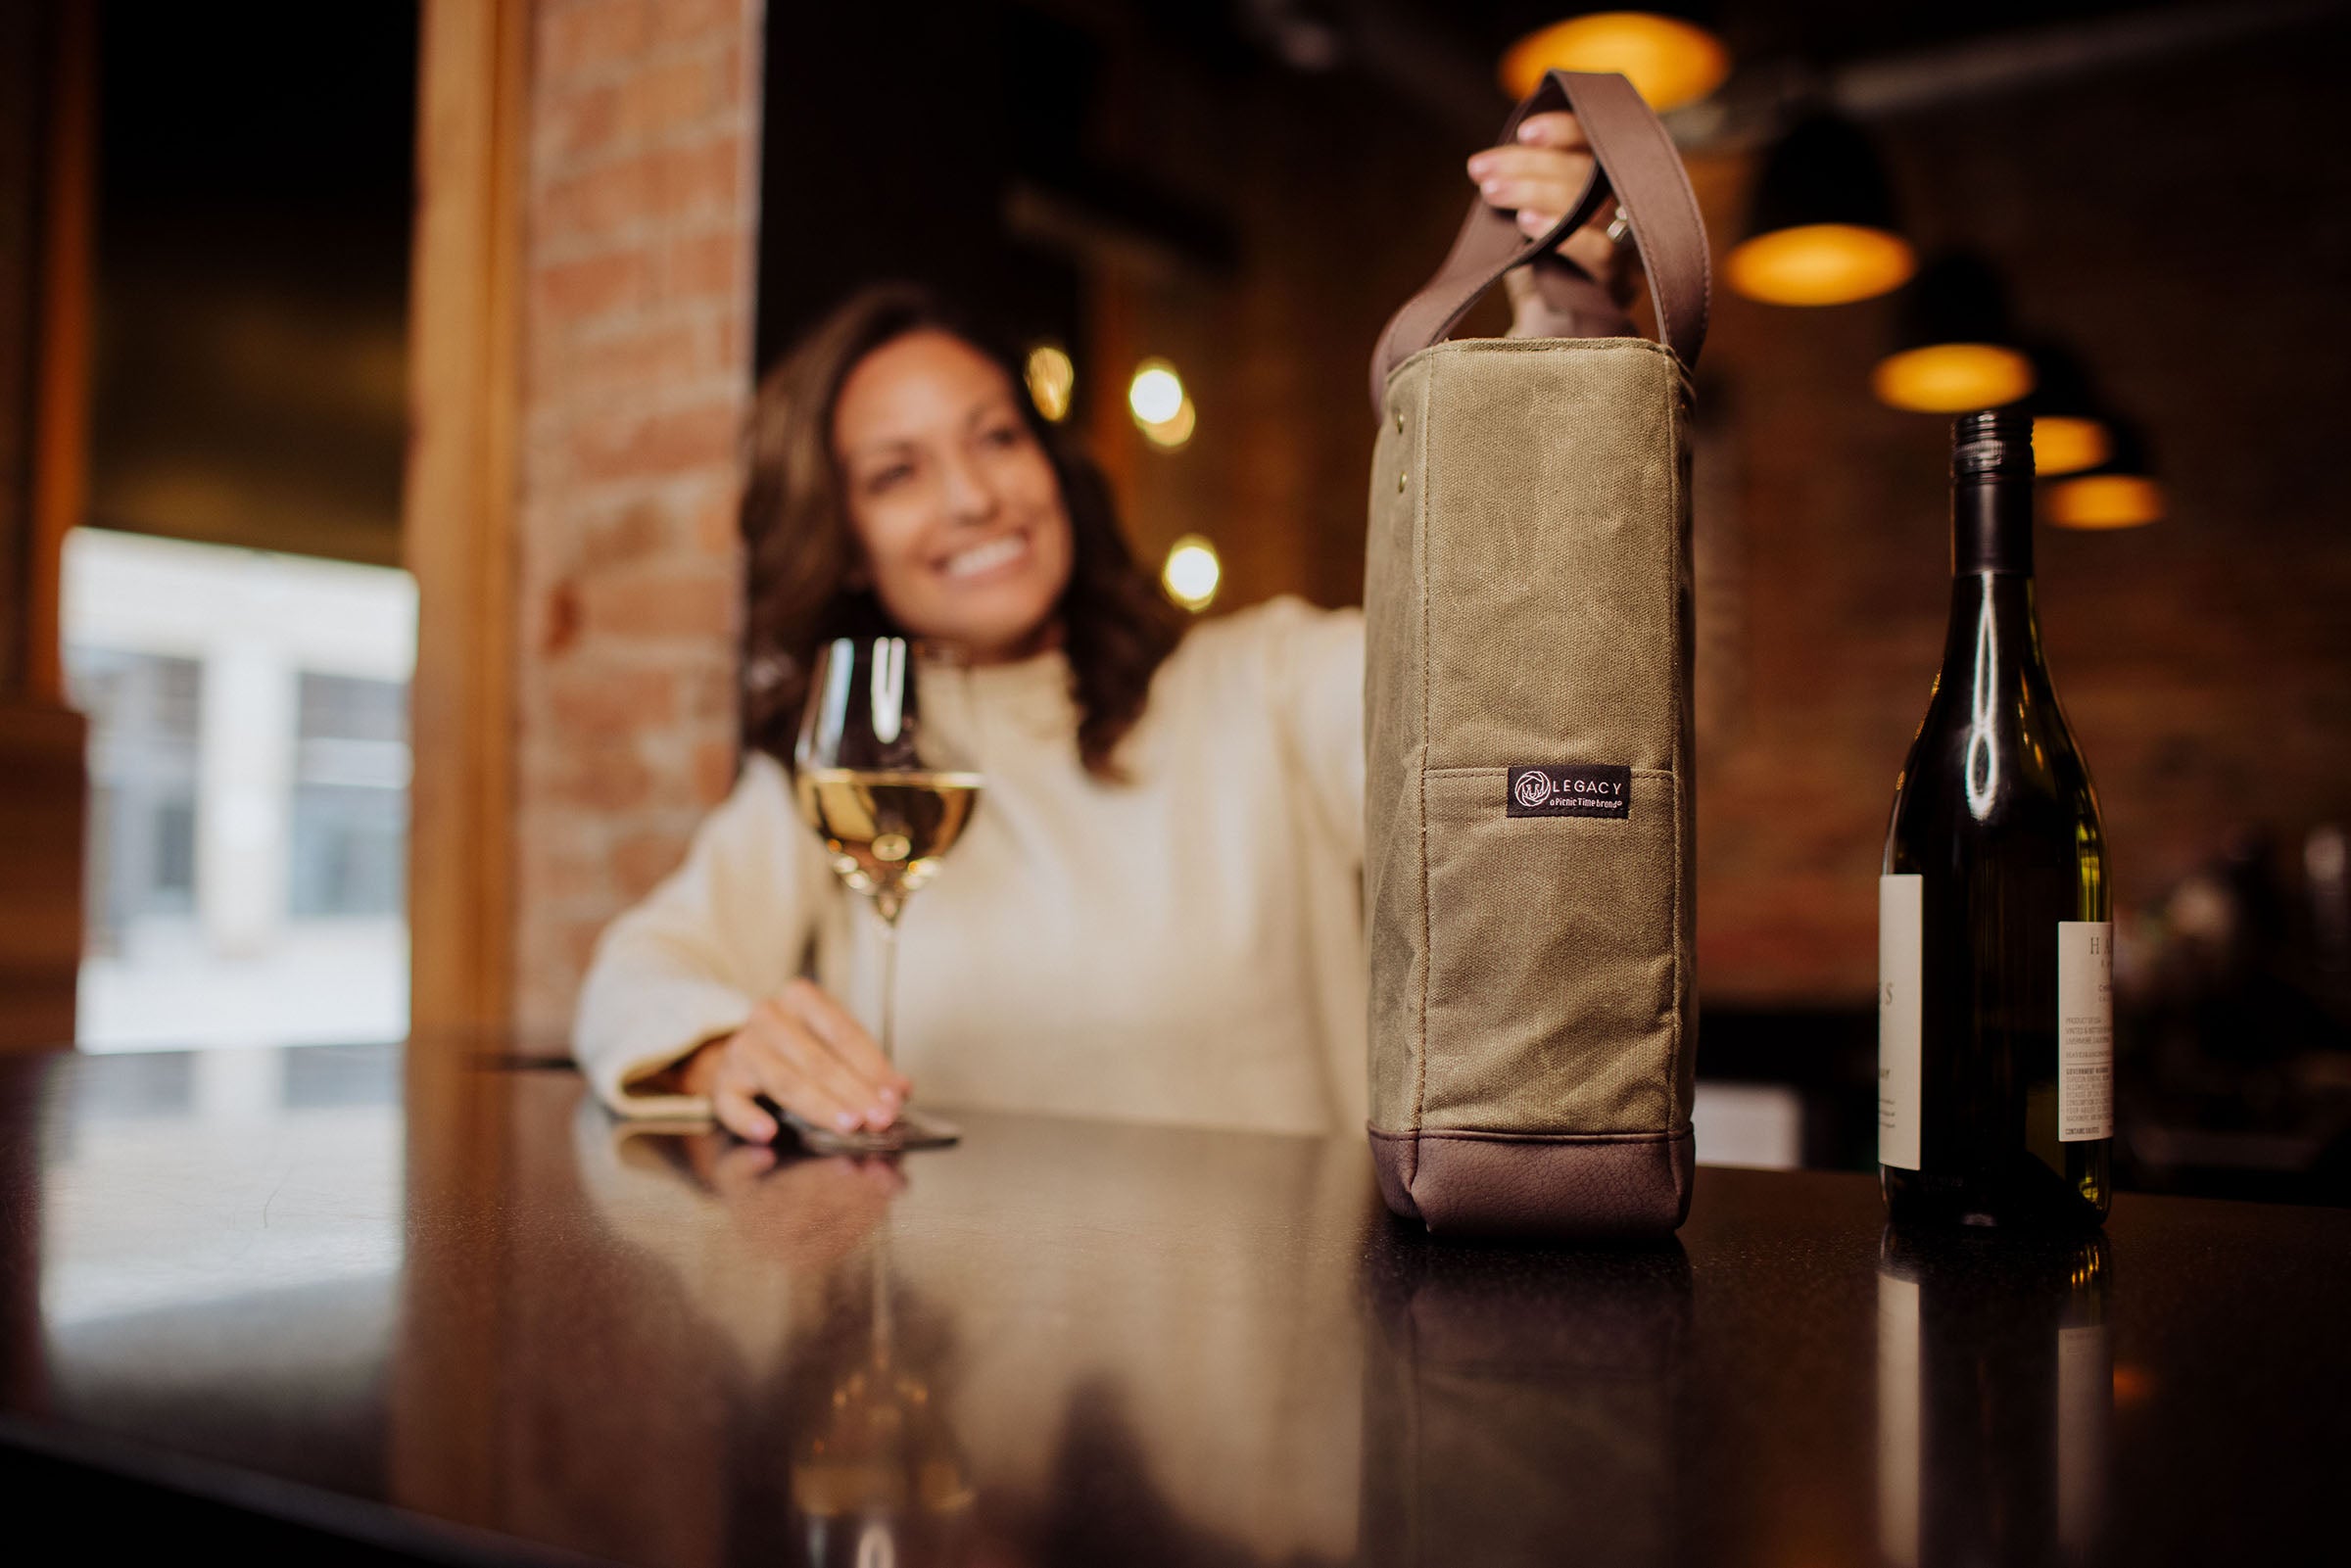 East Carolina Pirates - 2 Bottle Insulated Wine Cooler Bag